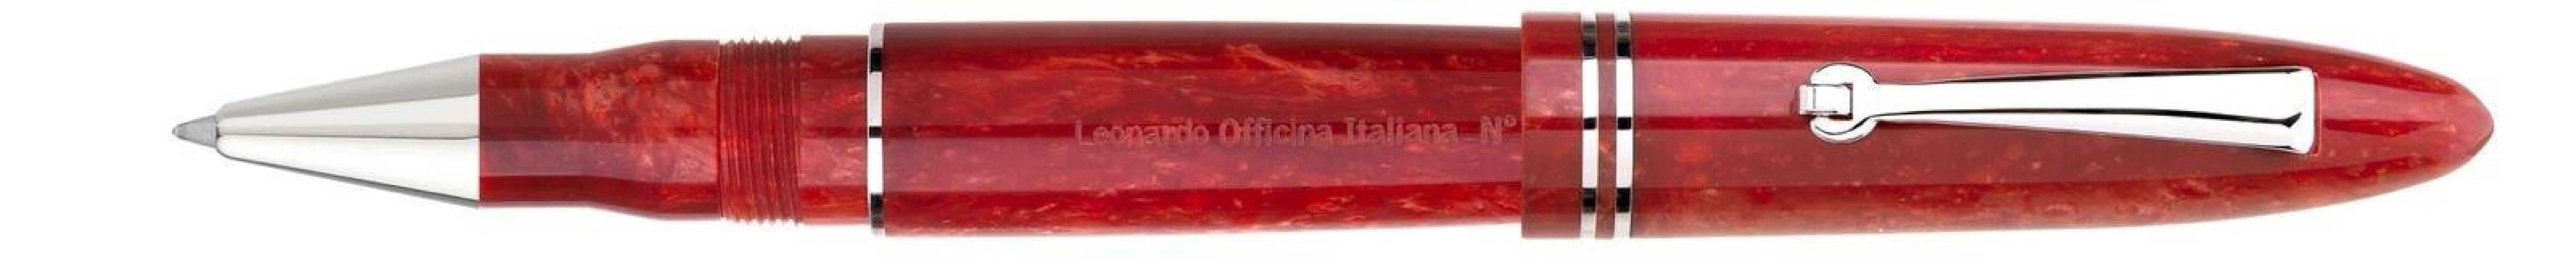 Leonardo Officina Italiana Furore Red passion RT Rollerball